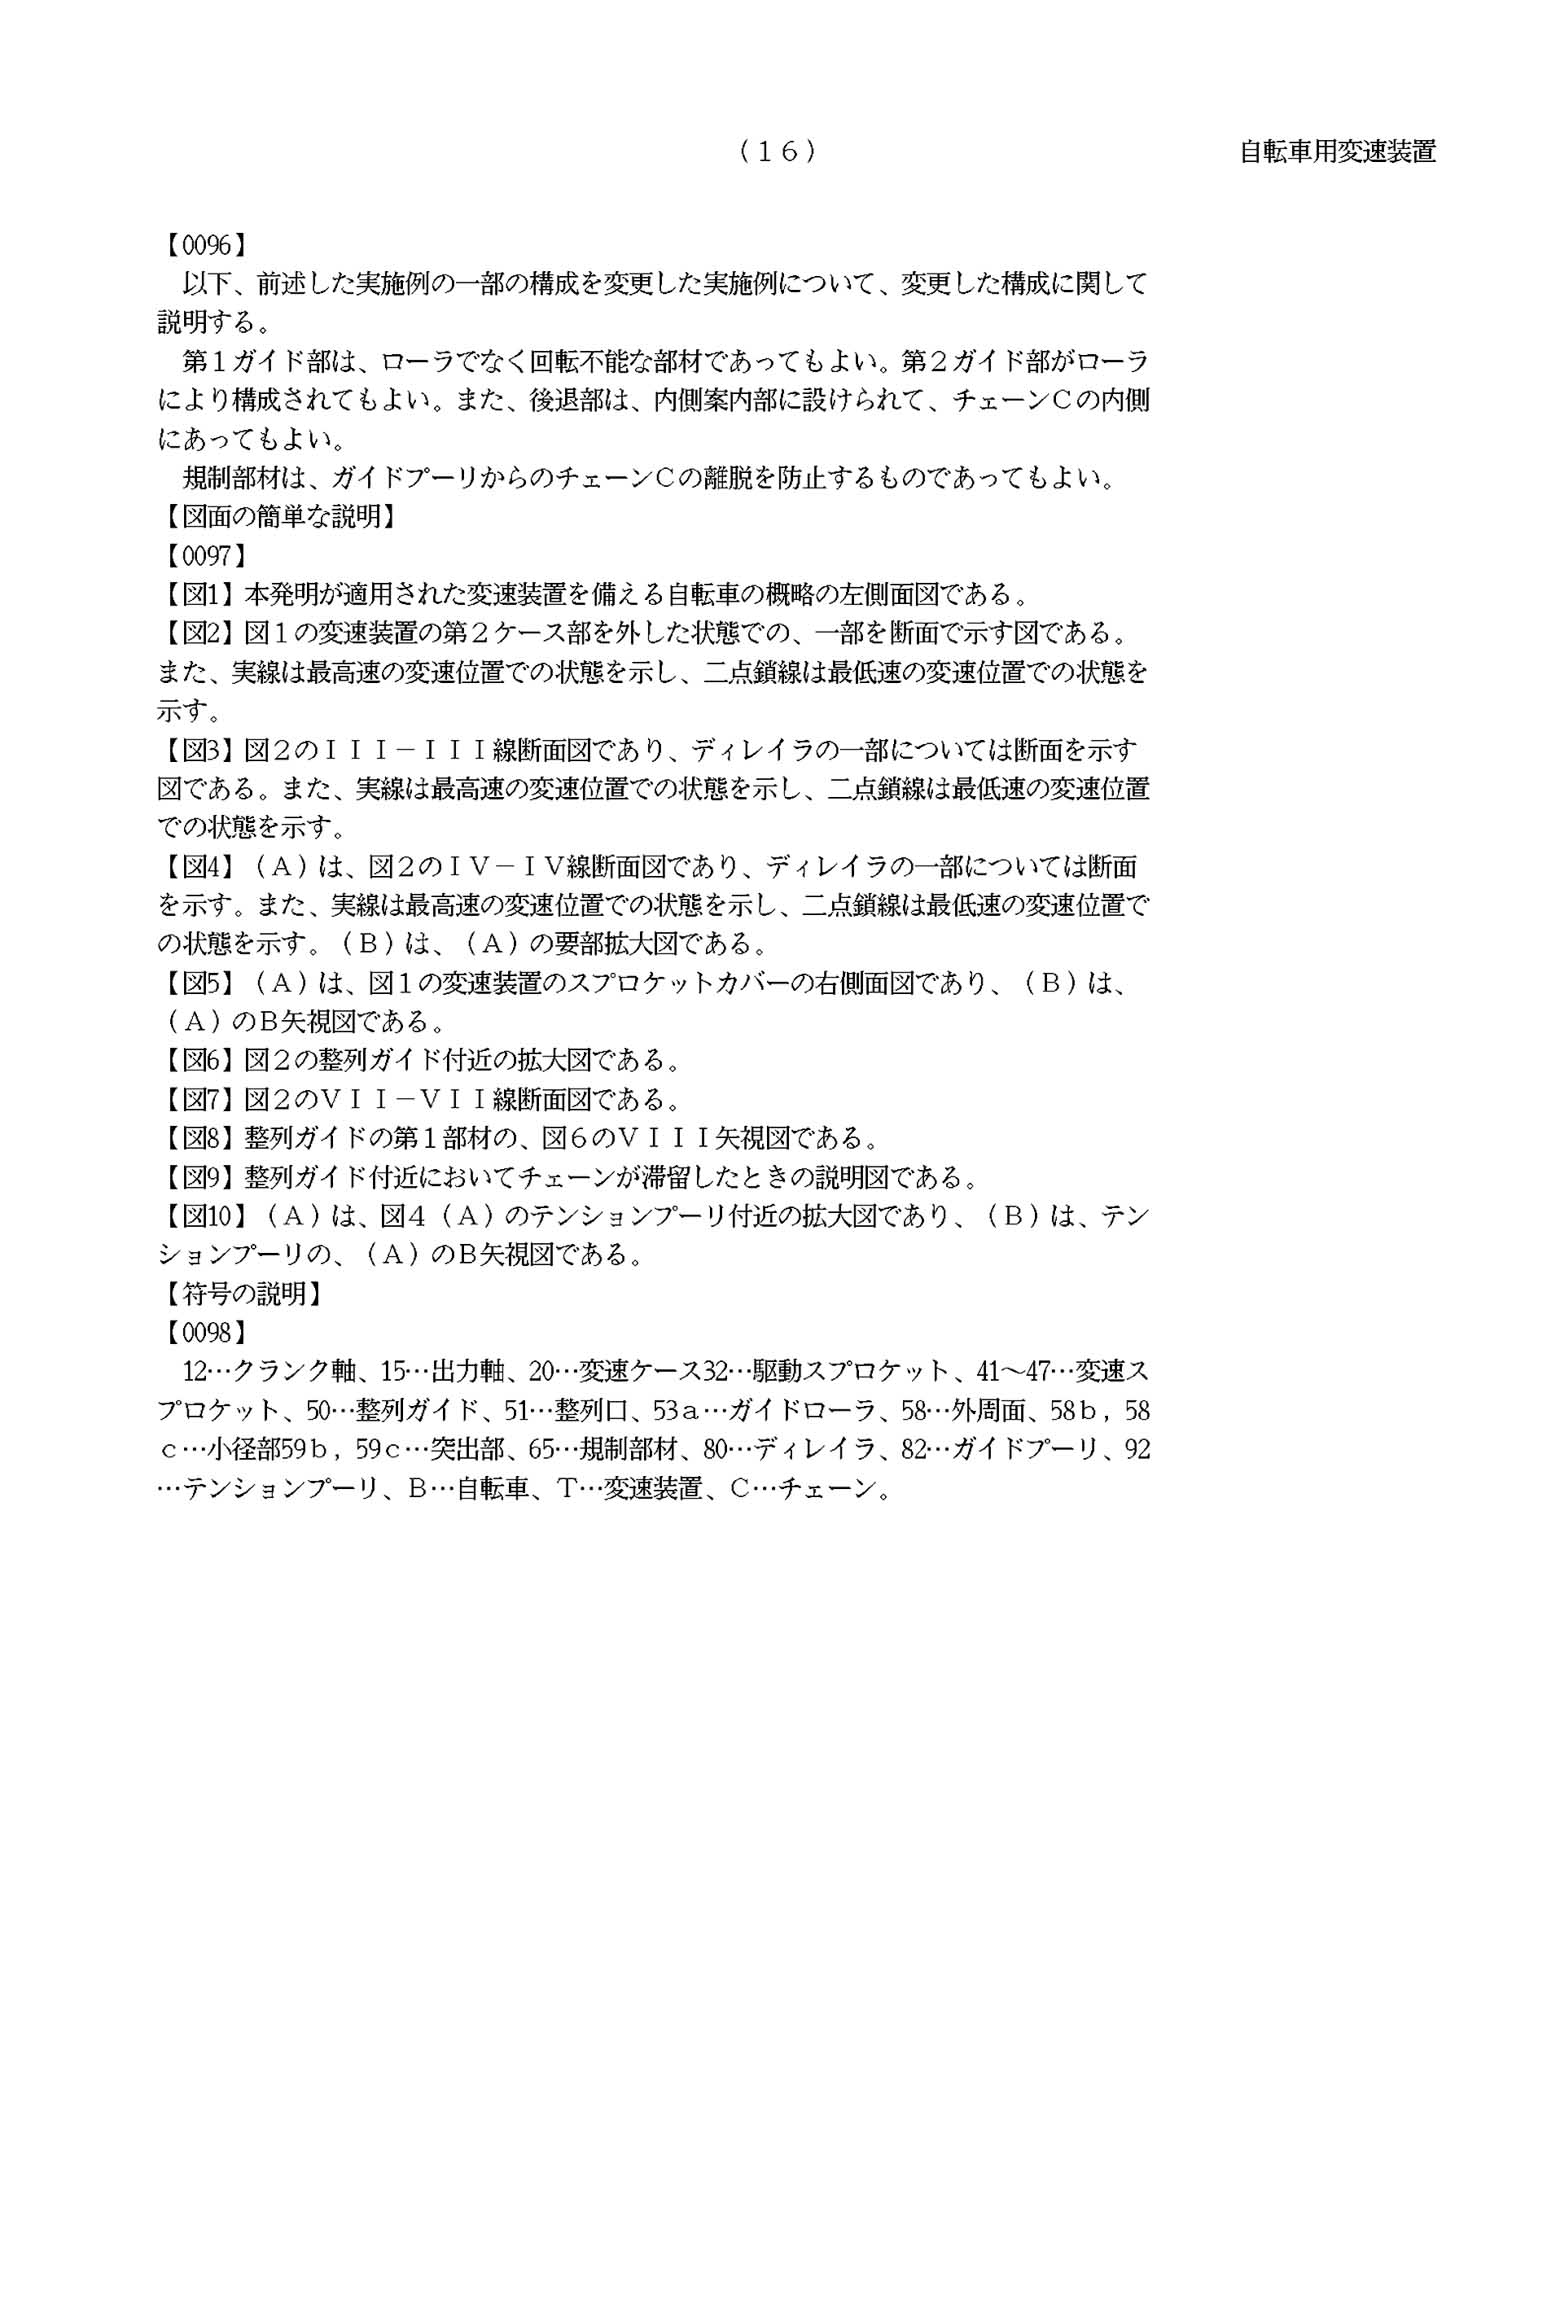 Japanese Patent 4601480 - Honda page 16 main image